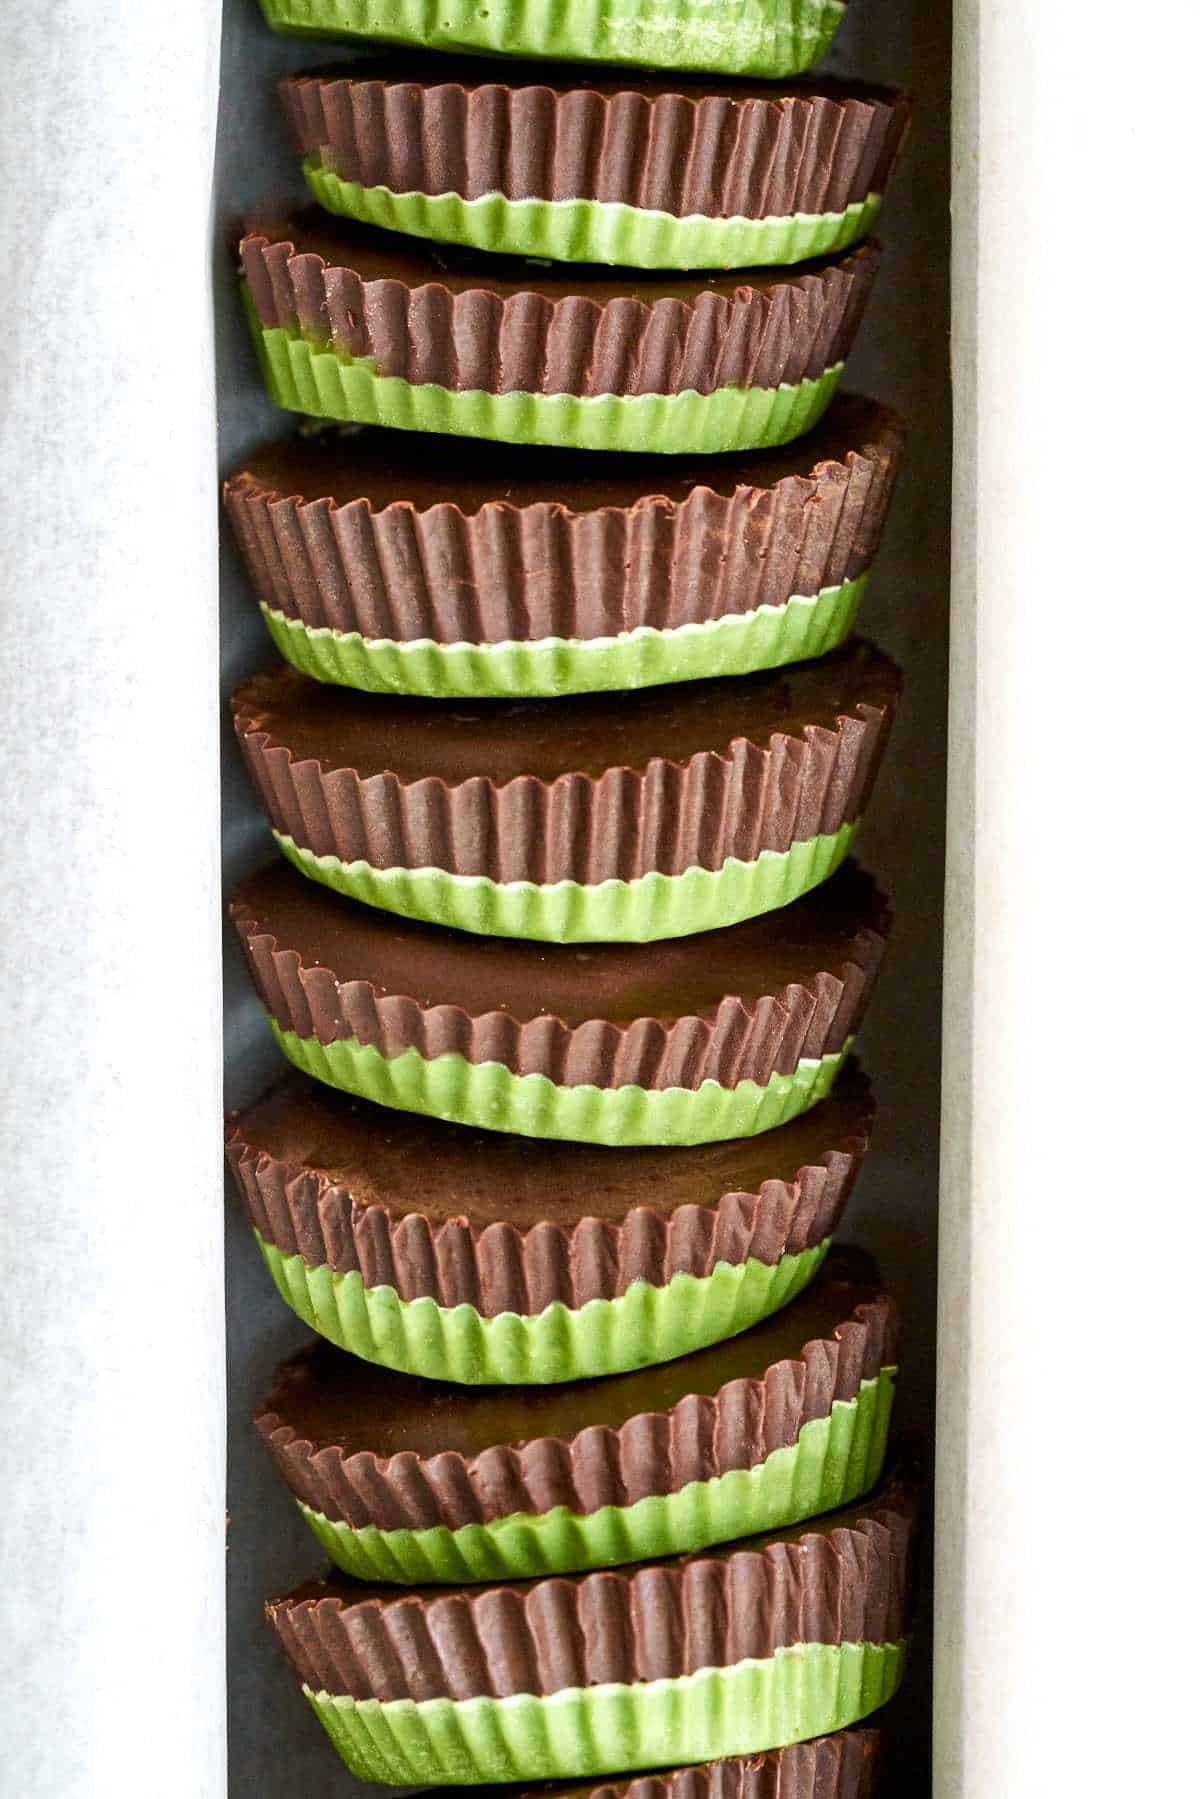 https://www.proportionalplate.com/wp-content/uploads/2020/10/Chocolate-Matcha-Peanut-Butter-Cups-11.jpg